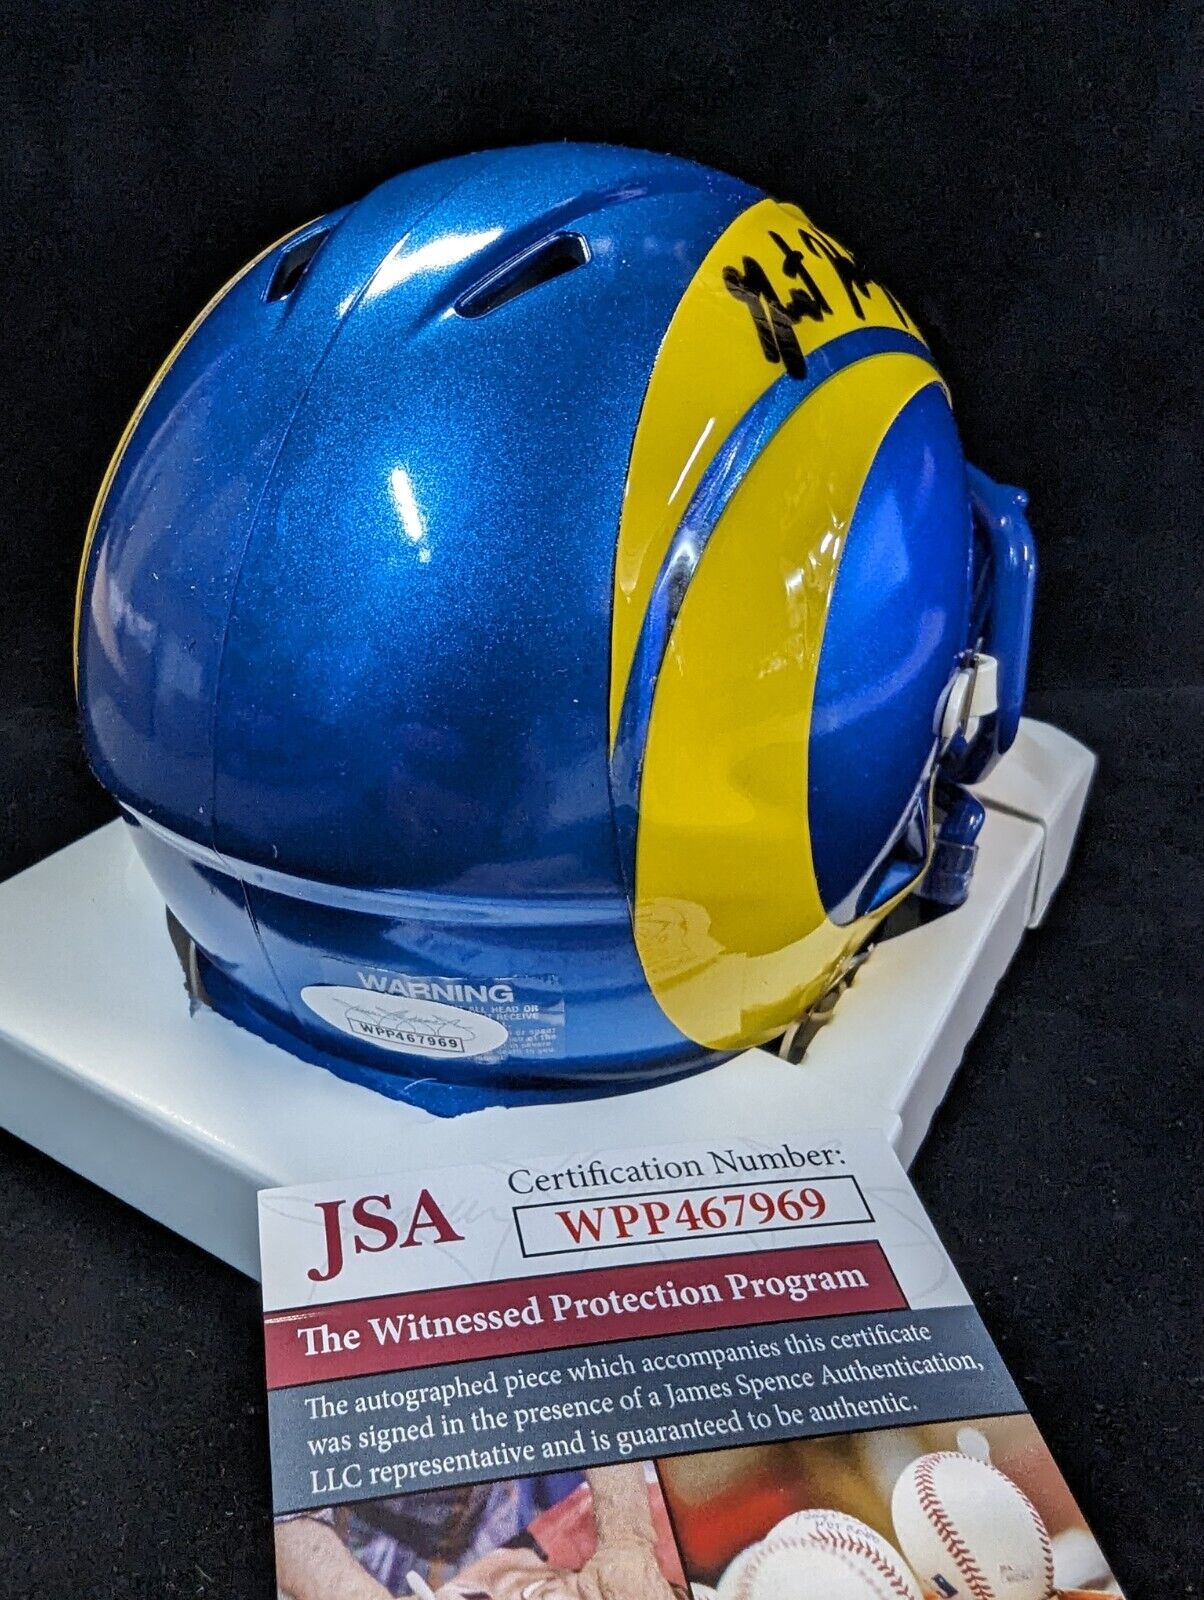 MVP Authentics Los Angeles Rams Grant Haley Autographed Speed Mini Helmet Jsa Coa 121.50 sports jersey framing , jersey framing